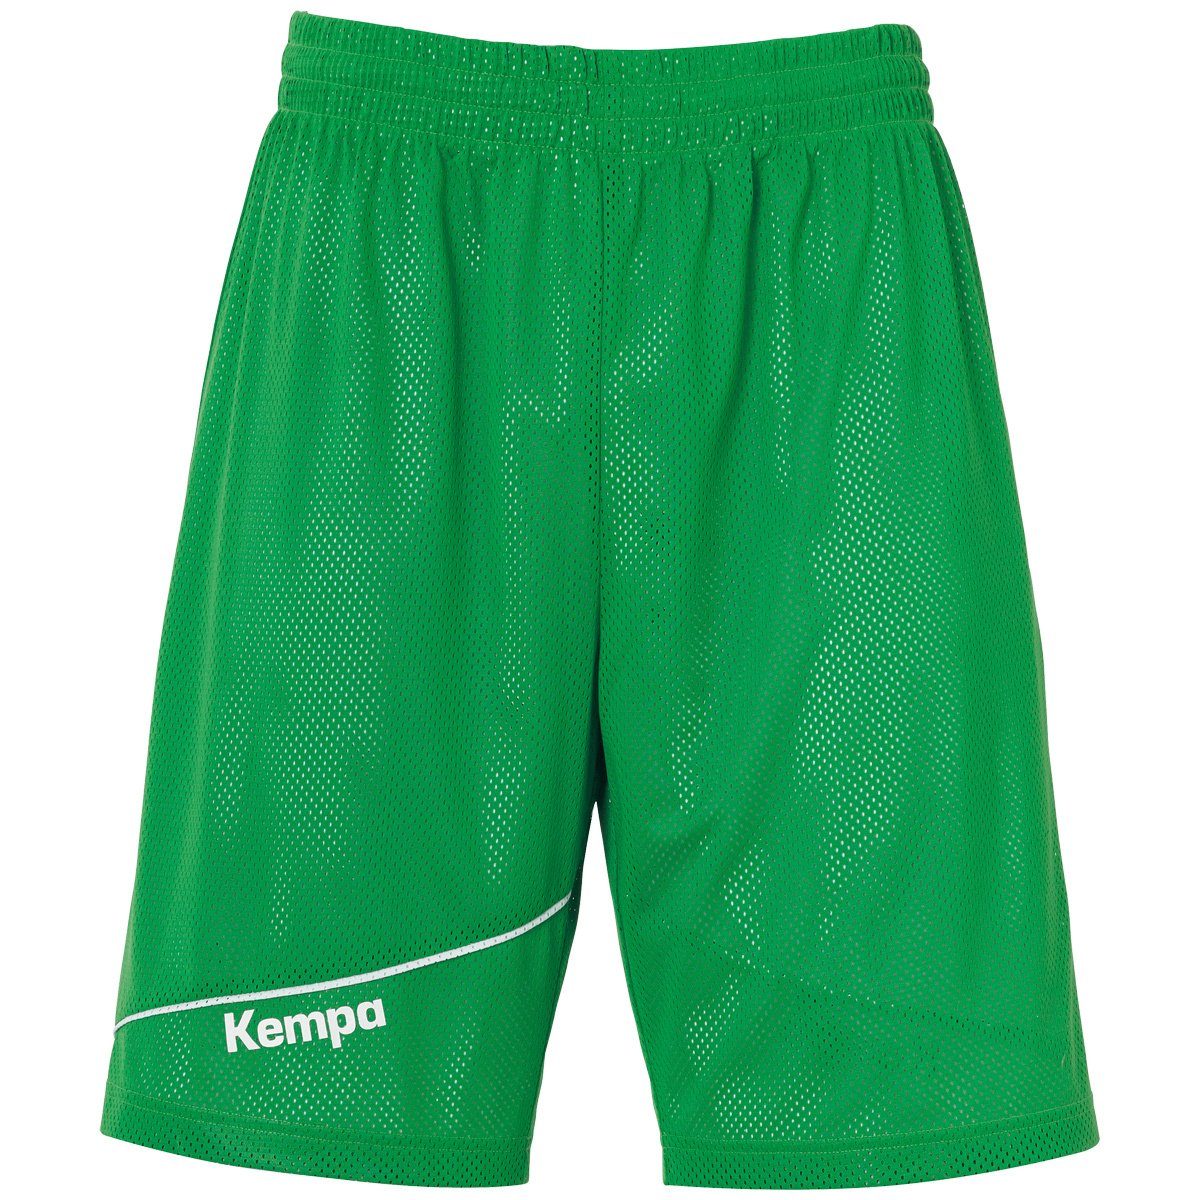 Kempa Shorts Kempa Shorts REVERSIBLE grün/weiß